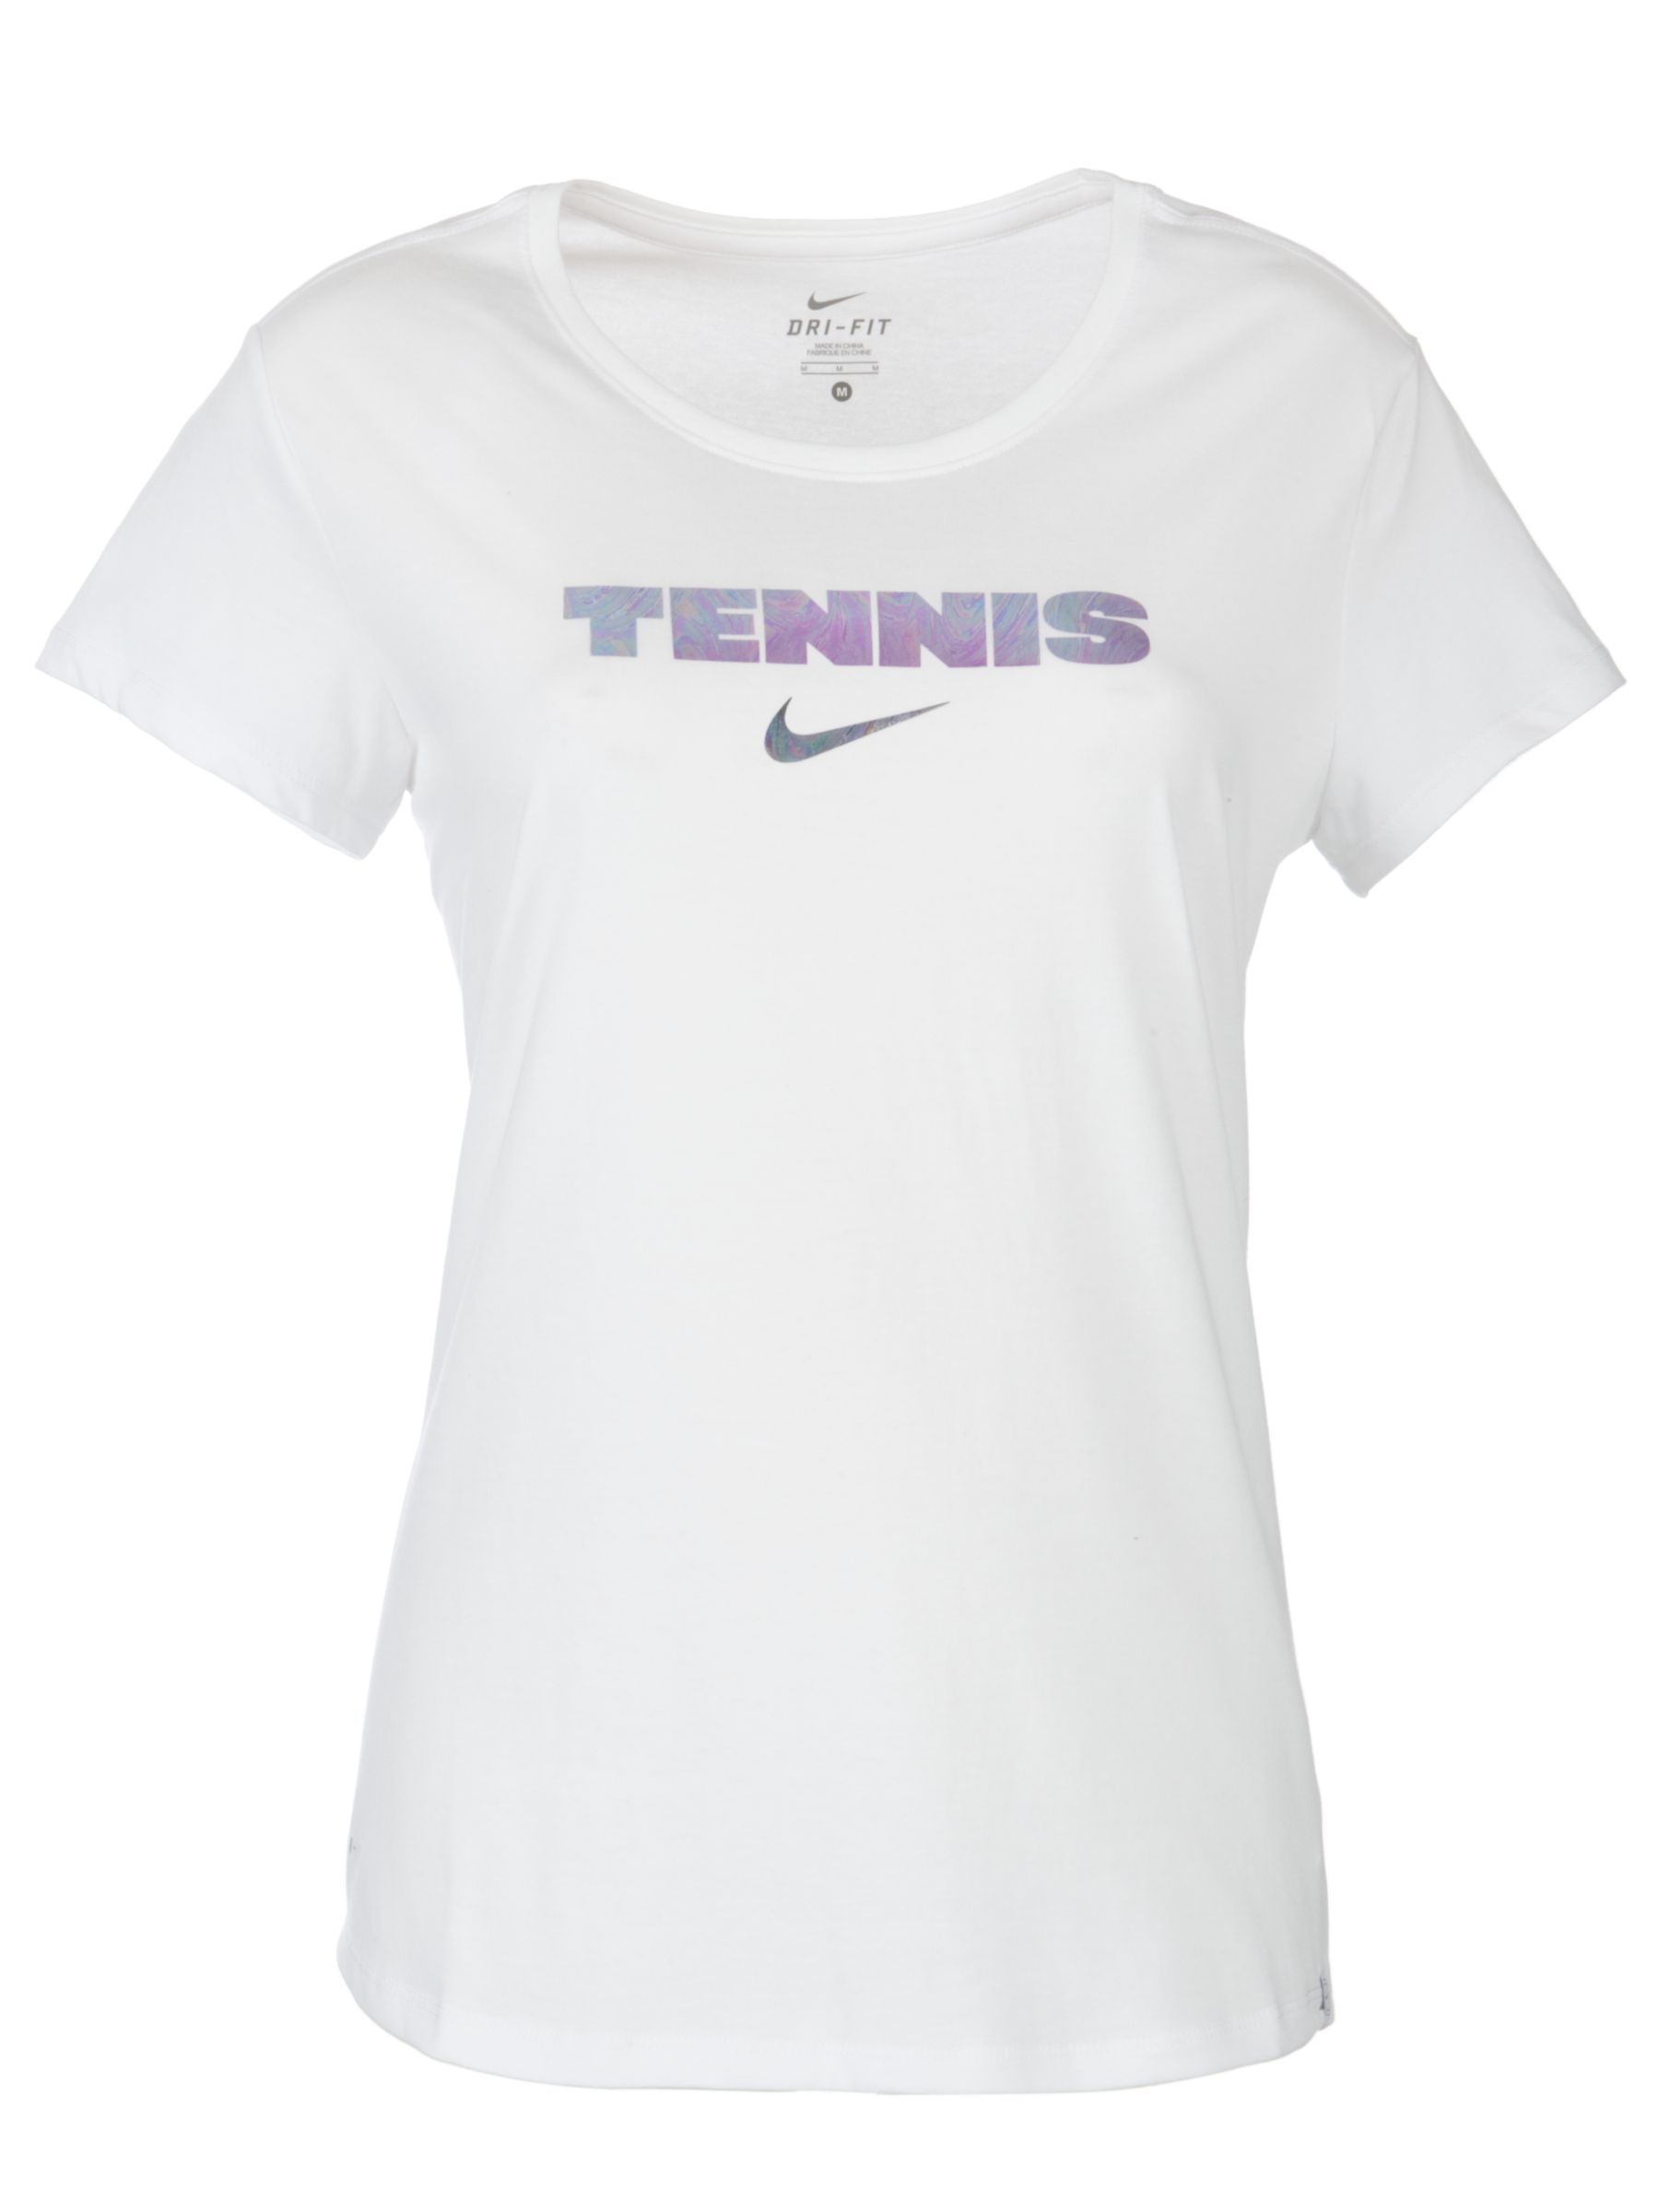 Tennis Swoosh T-Shirt, White/black